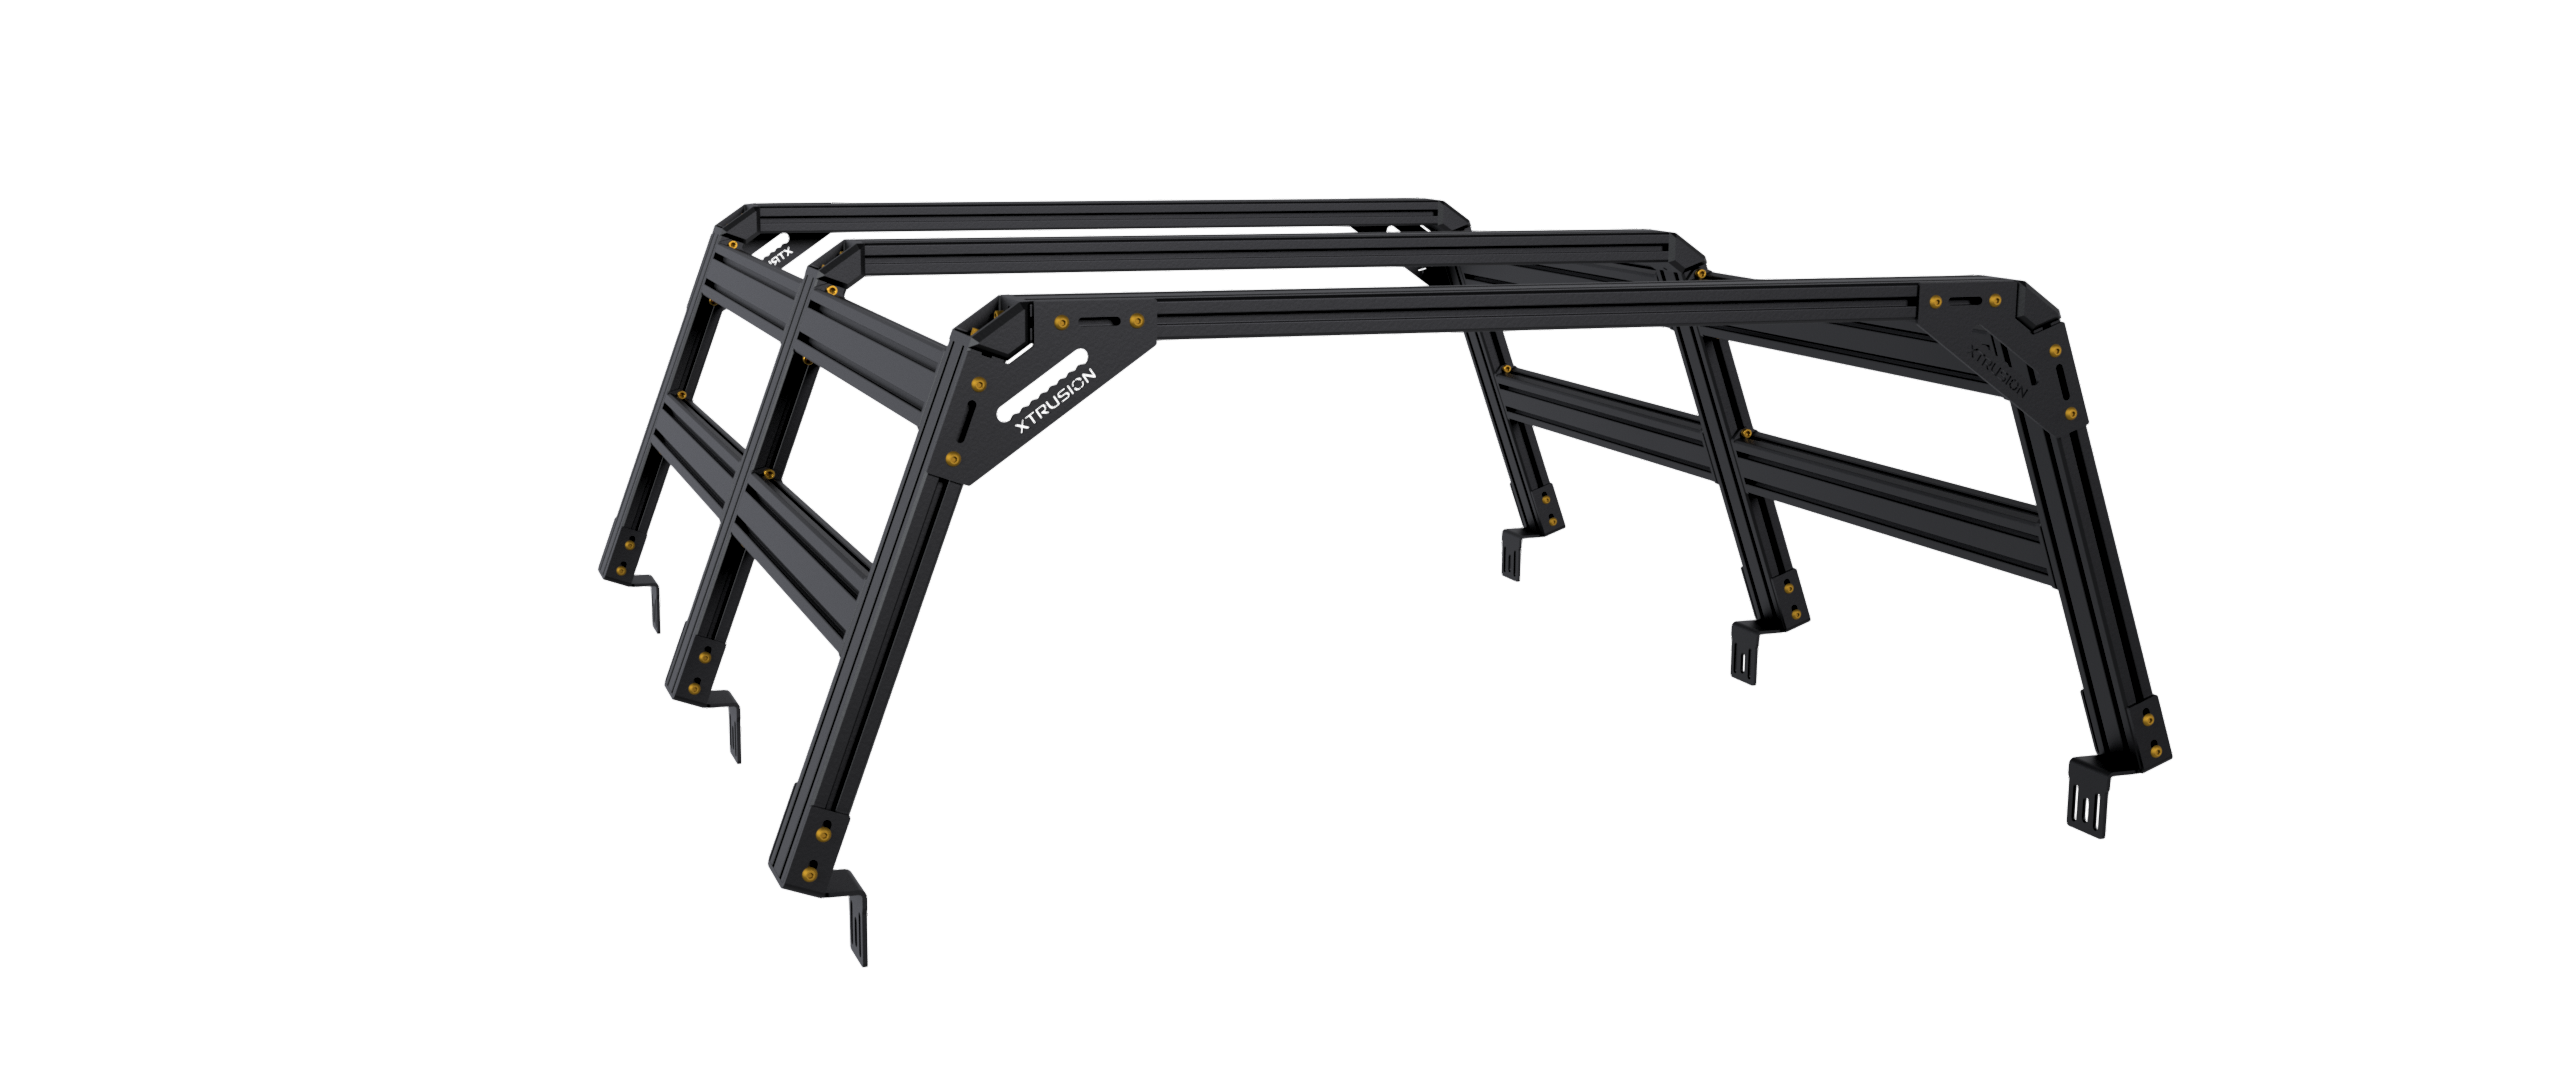 XTR3 Bed Rack for Nissan Titan